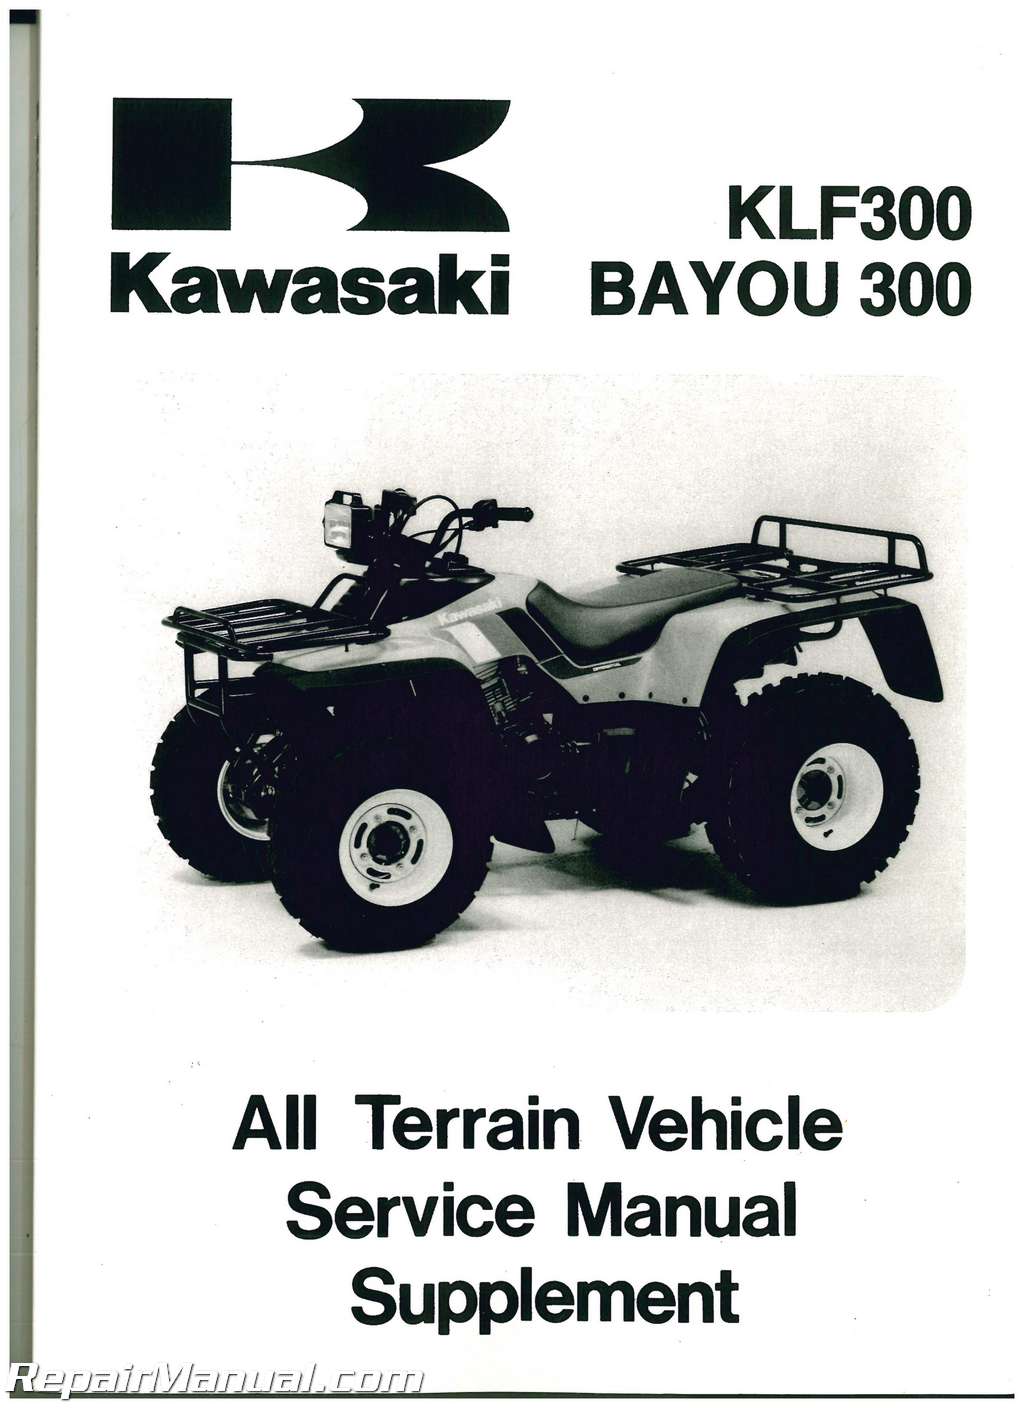 1988-2006 Kawasaki Service Manual Supplement